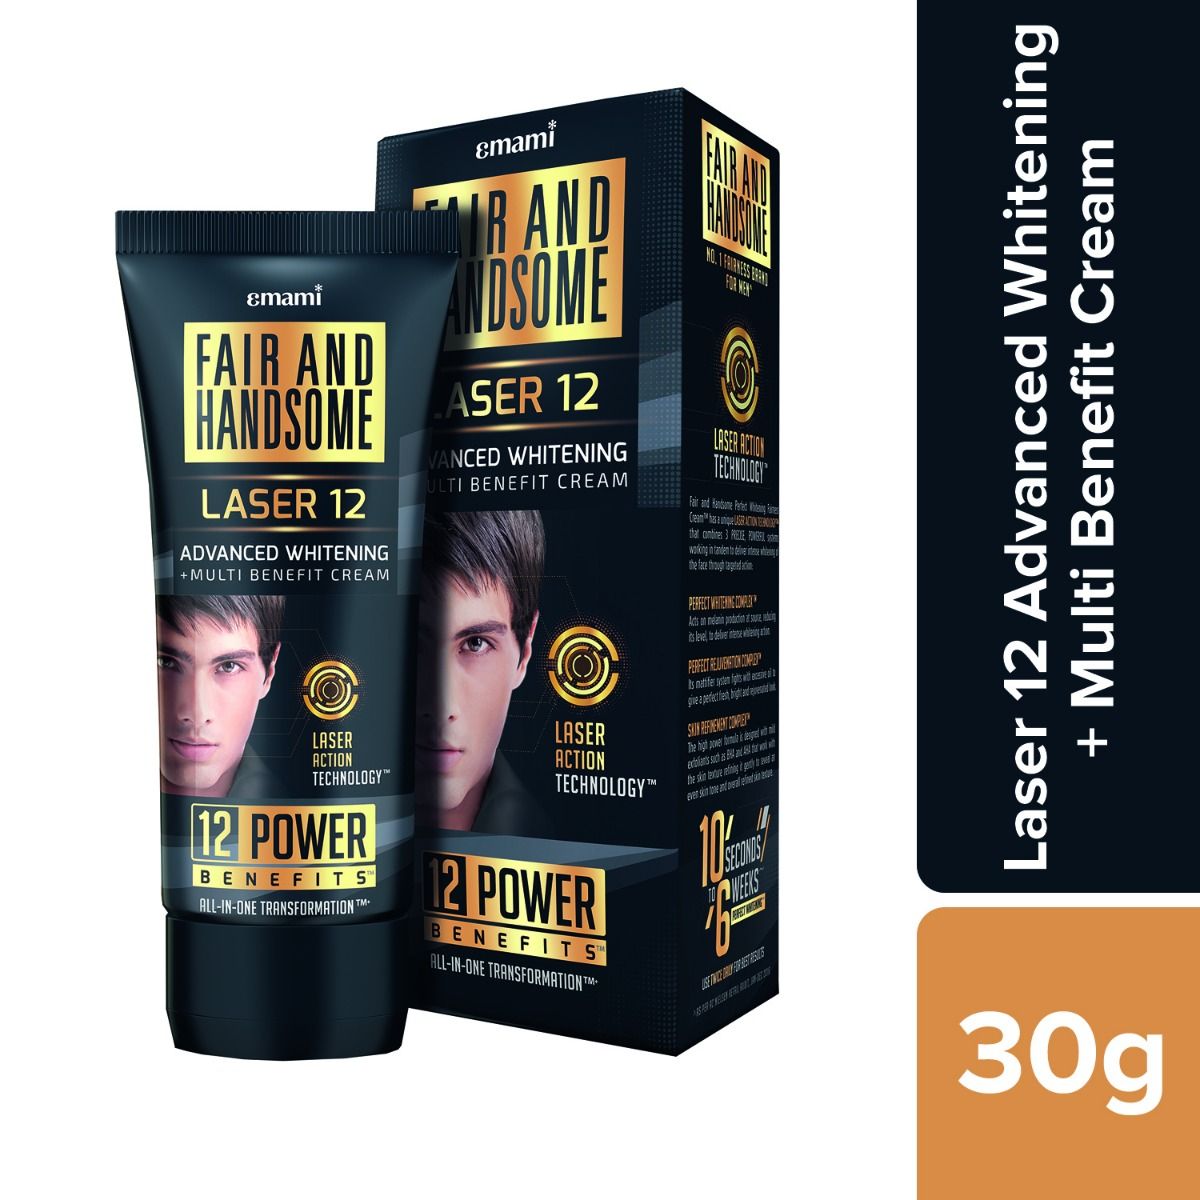 Buy Fair and Handsome Laser 12 Advanced Whitening + Multi Benefit Cream, 30 gm Online